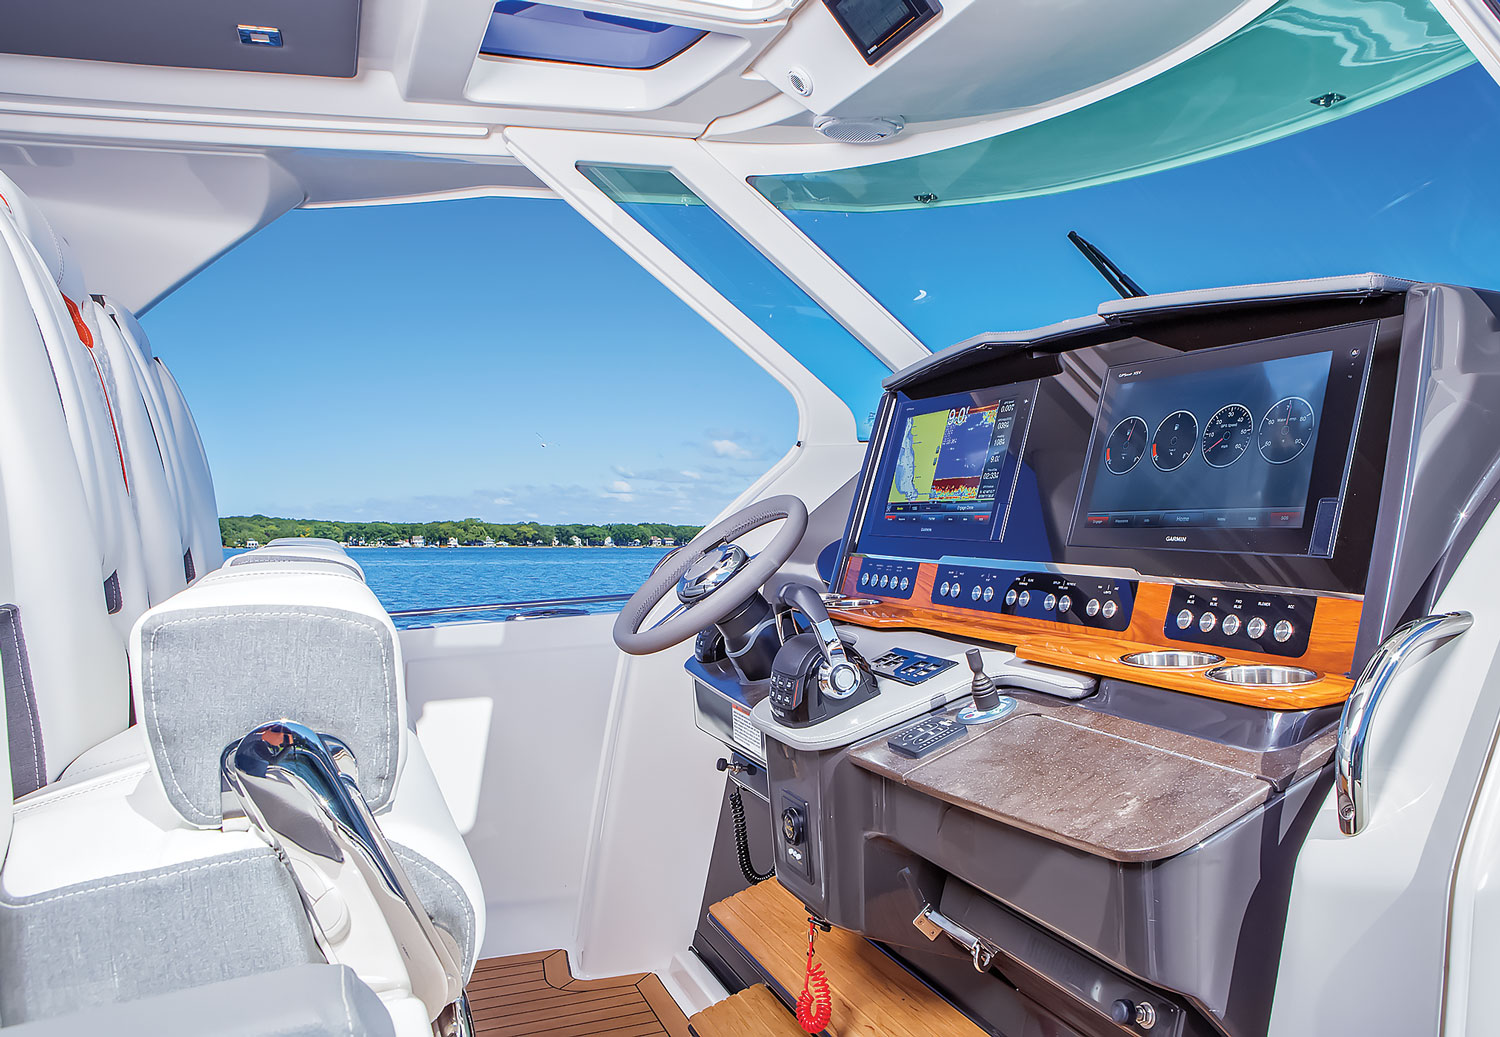 Luxury boat electronics closeup 